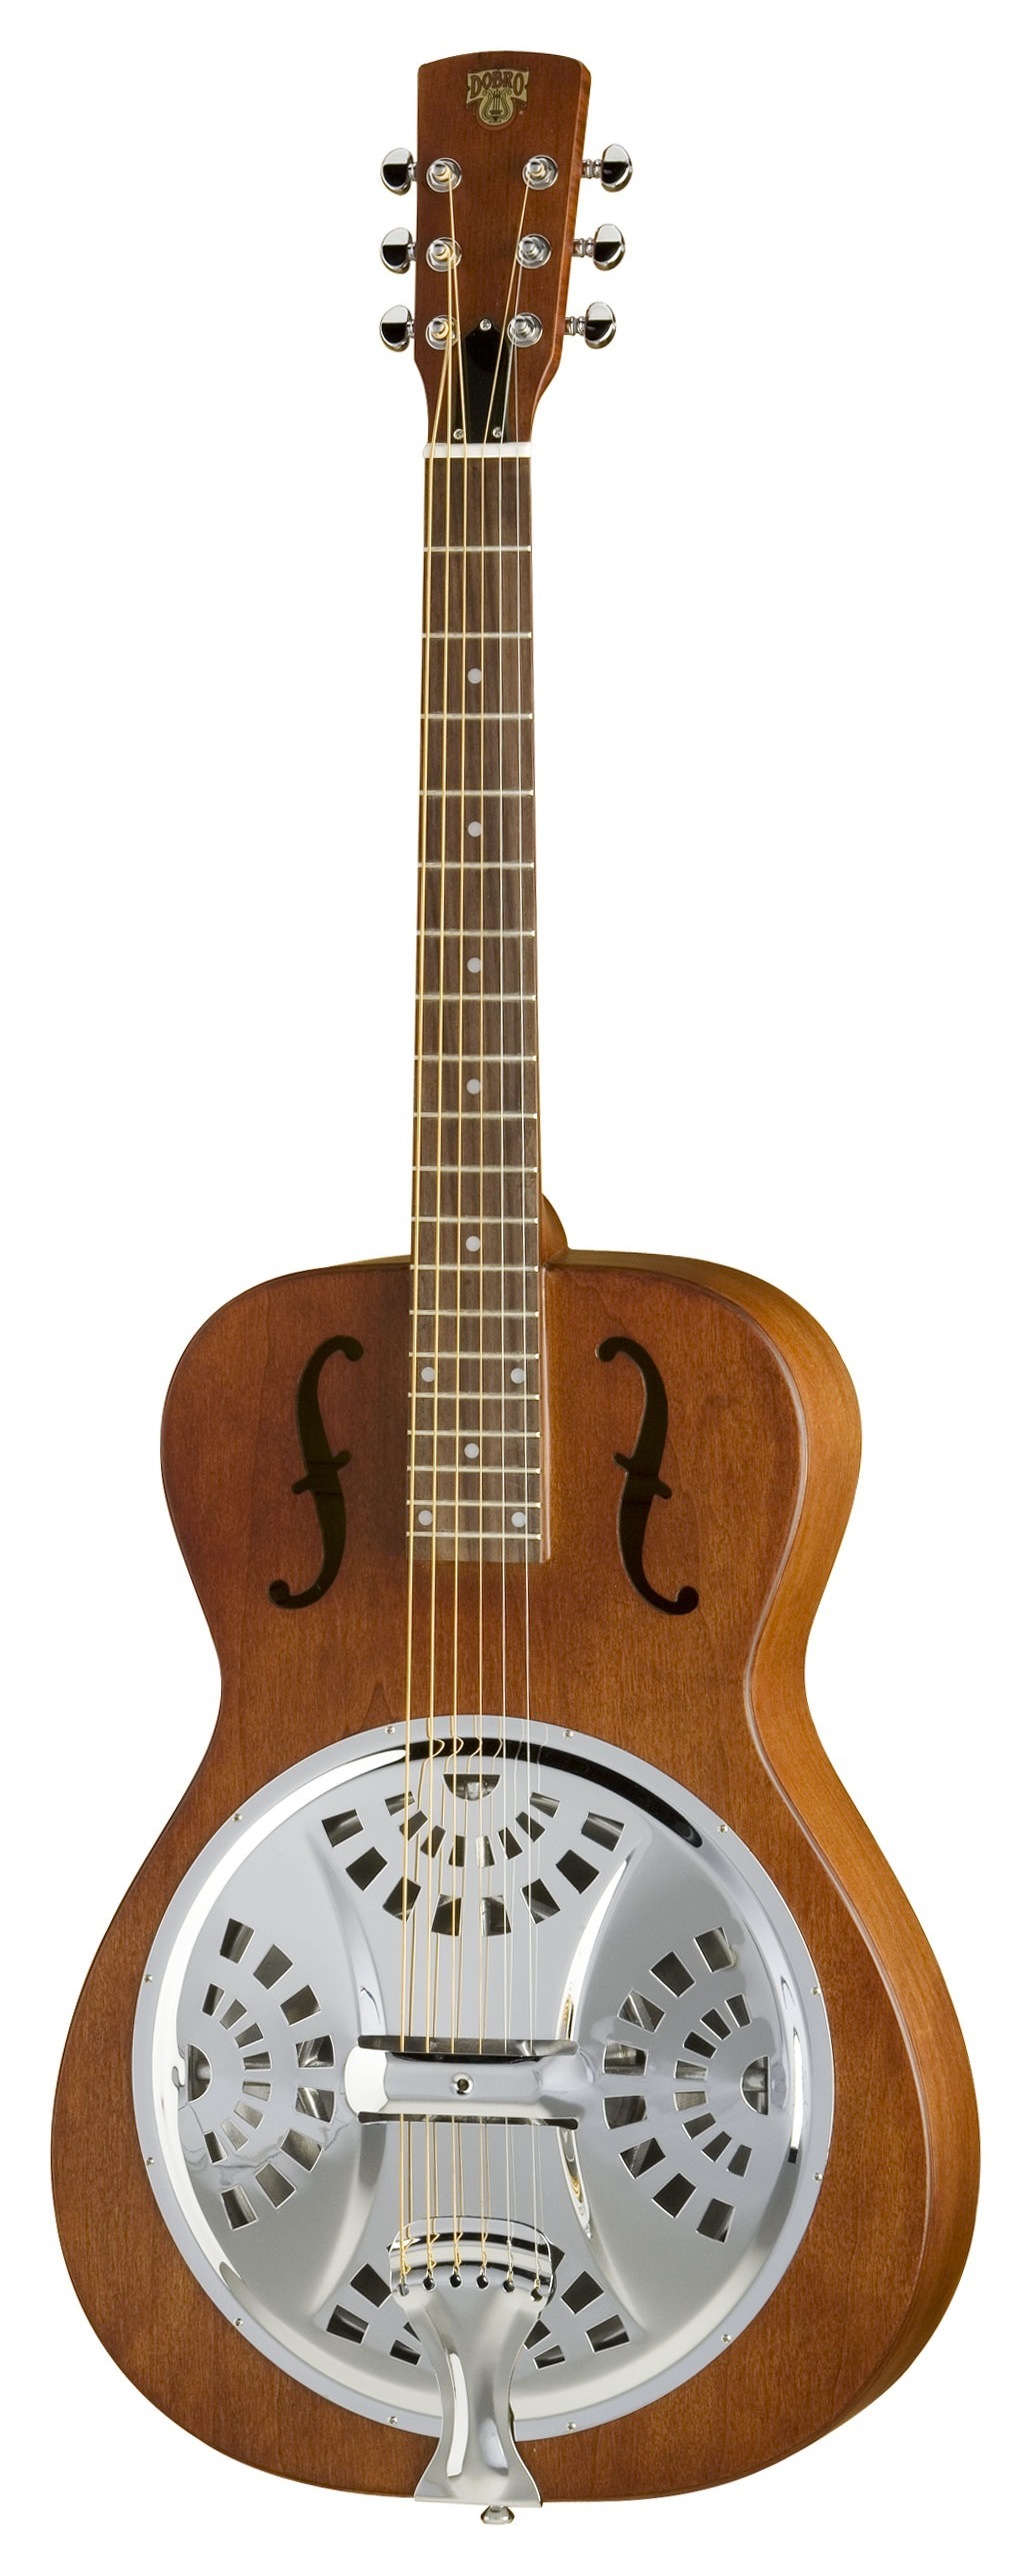 Epiphone Dobro Hound Dog Roundneck Resonator Guitar (Maple) - Vintage Brown